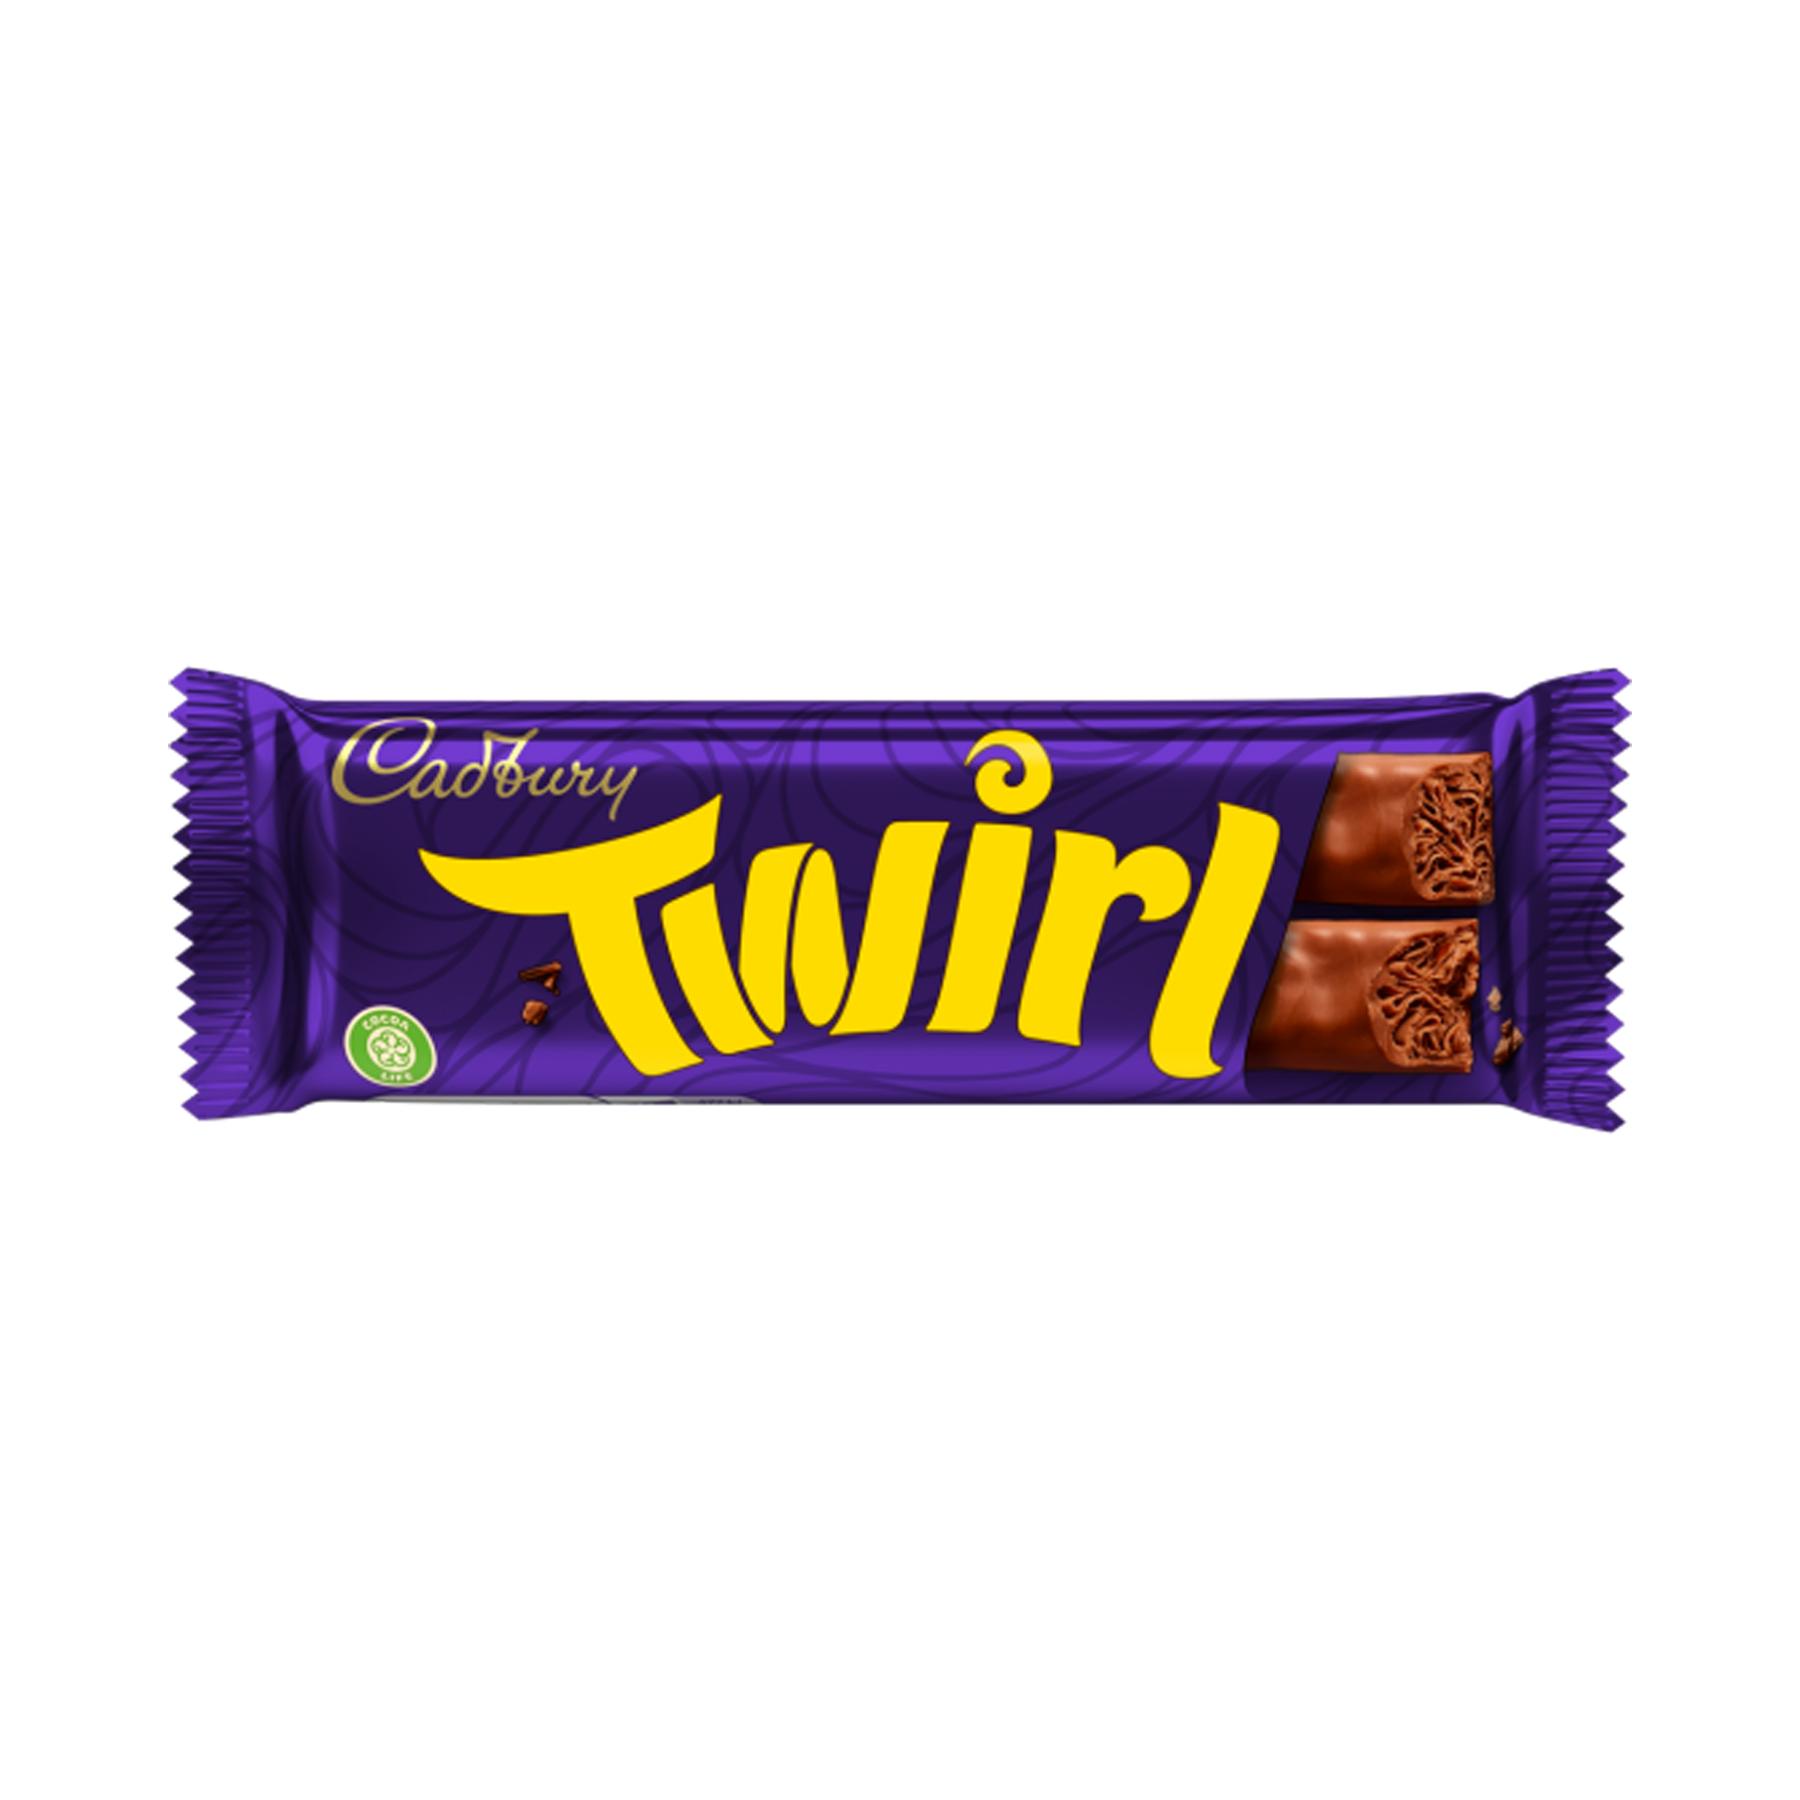 Cadbury Twirl Chocolate Bar (43g)